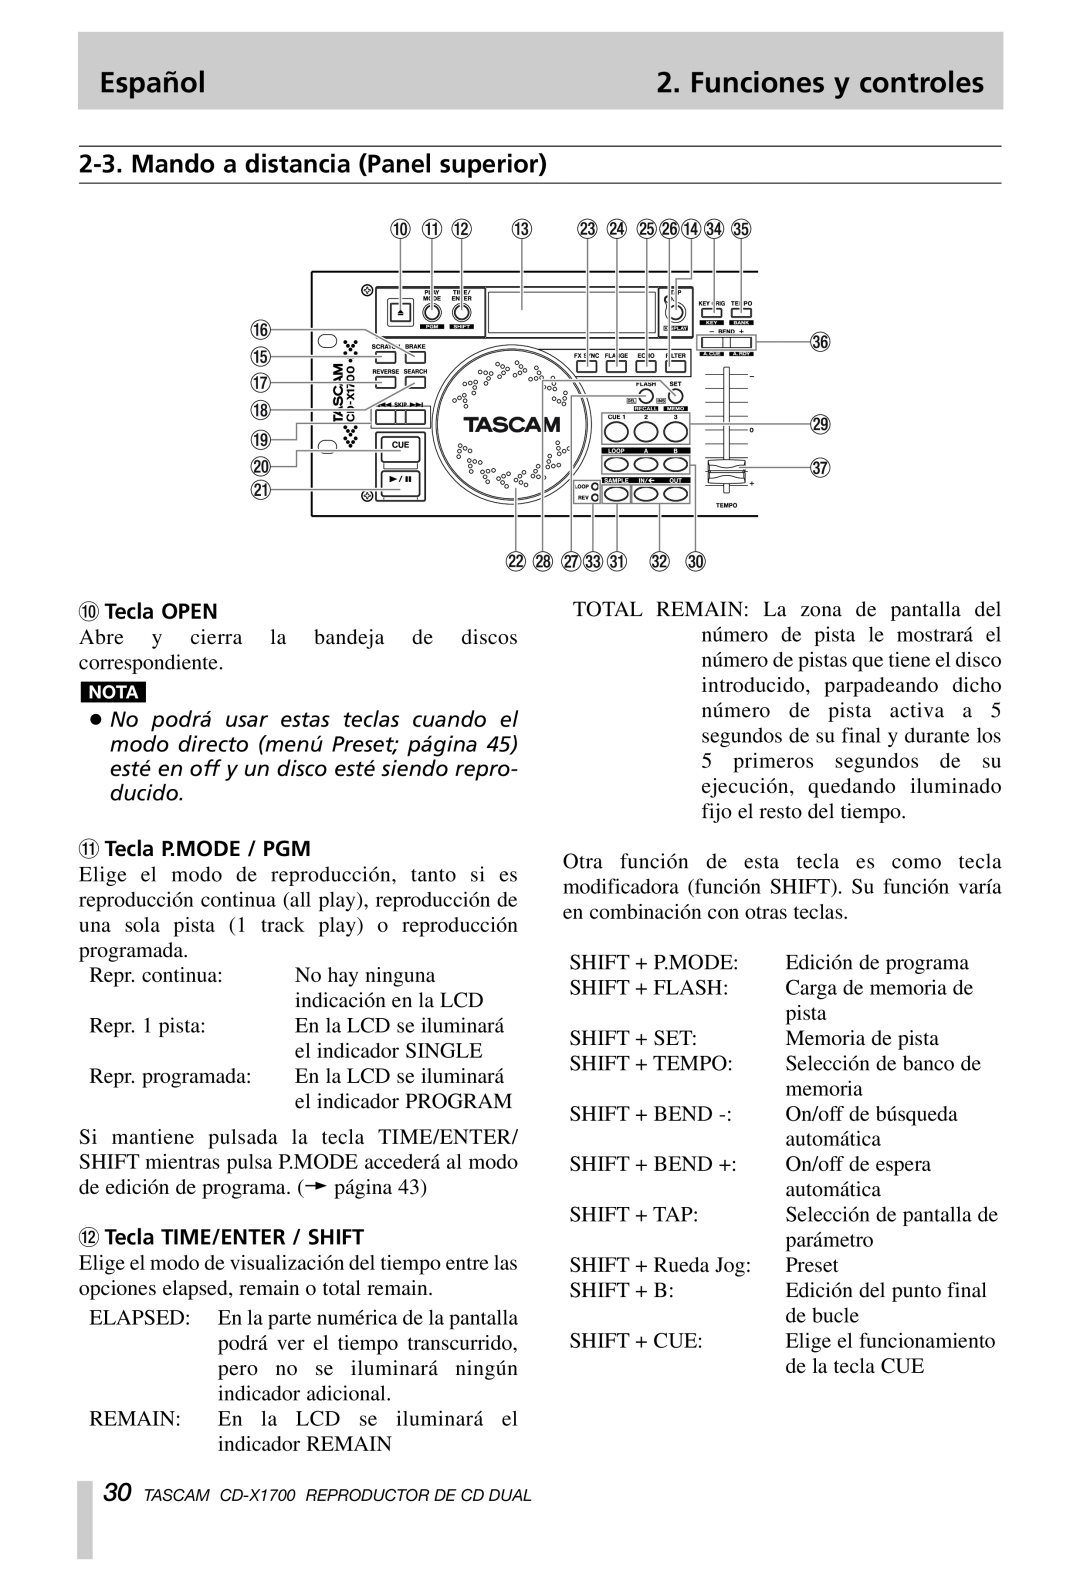 Tascam CD-X1700 Mando a distancia Panel superior, Español, Funciones y controles, 0Tecla OPEN, qTecla P.MODE / PGM 